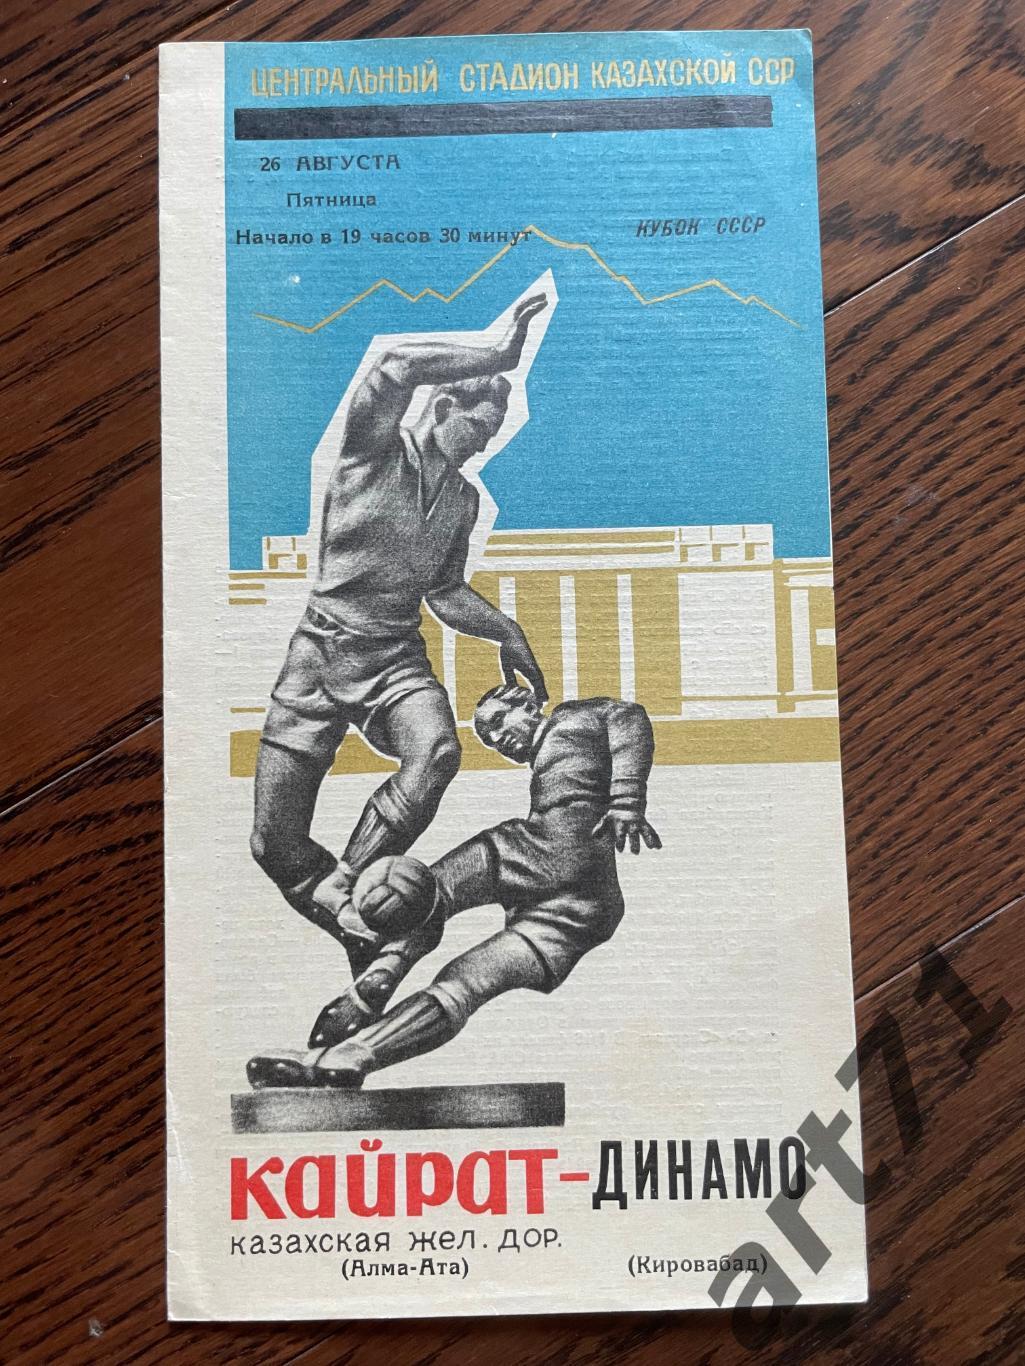 Кайрат Алма-Ата - Динамо Кировабад 20.06.1966 кубок СССР